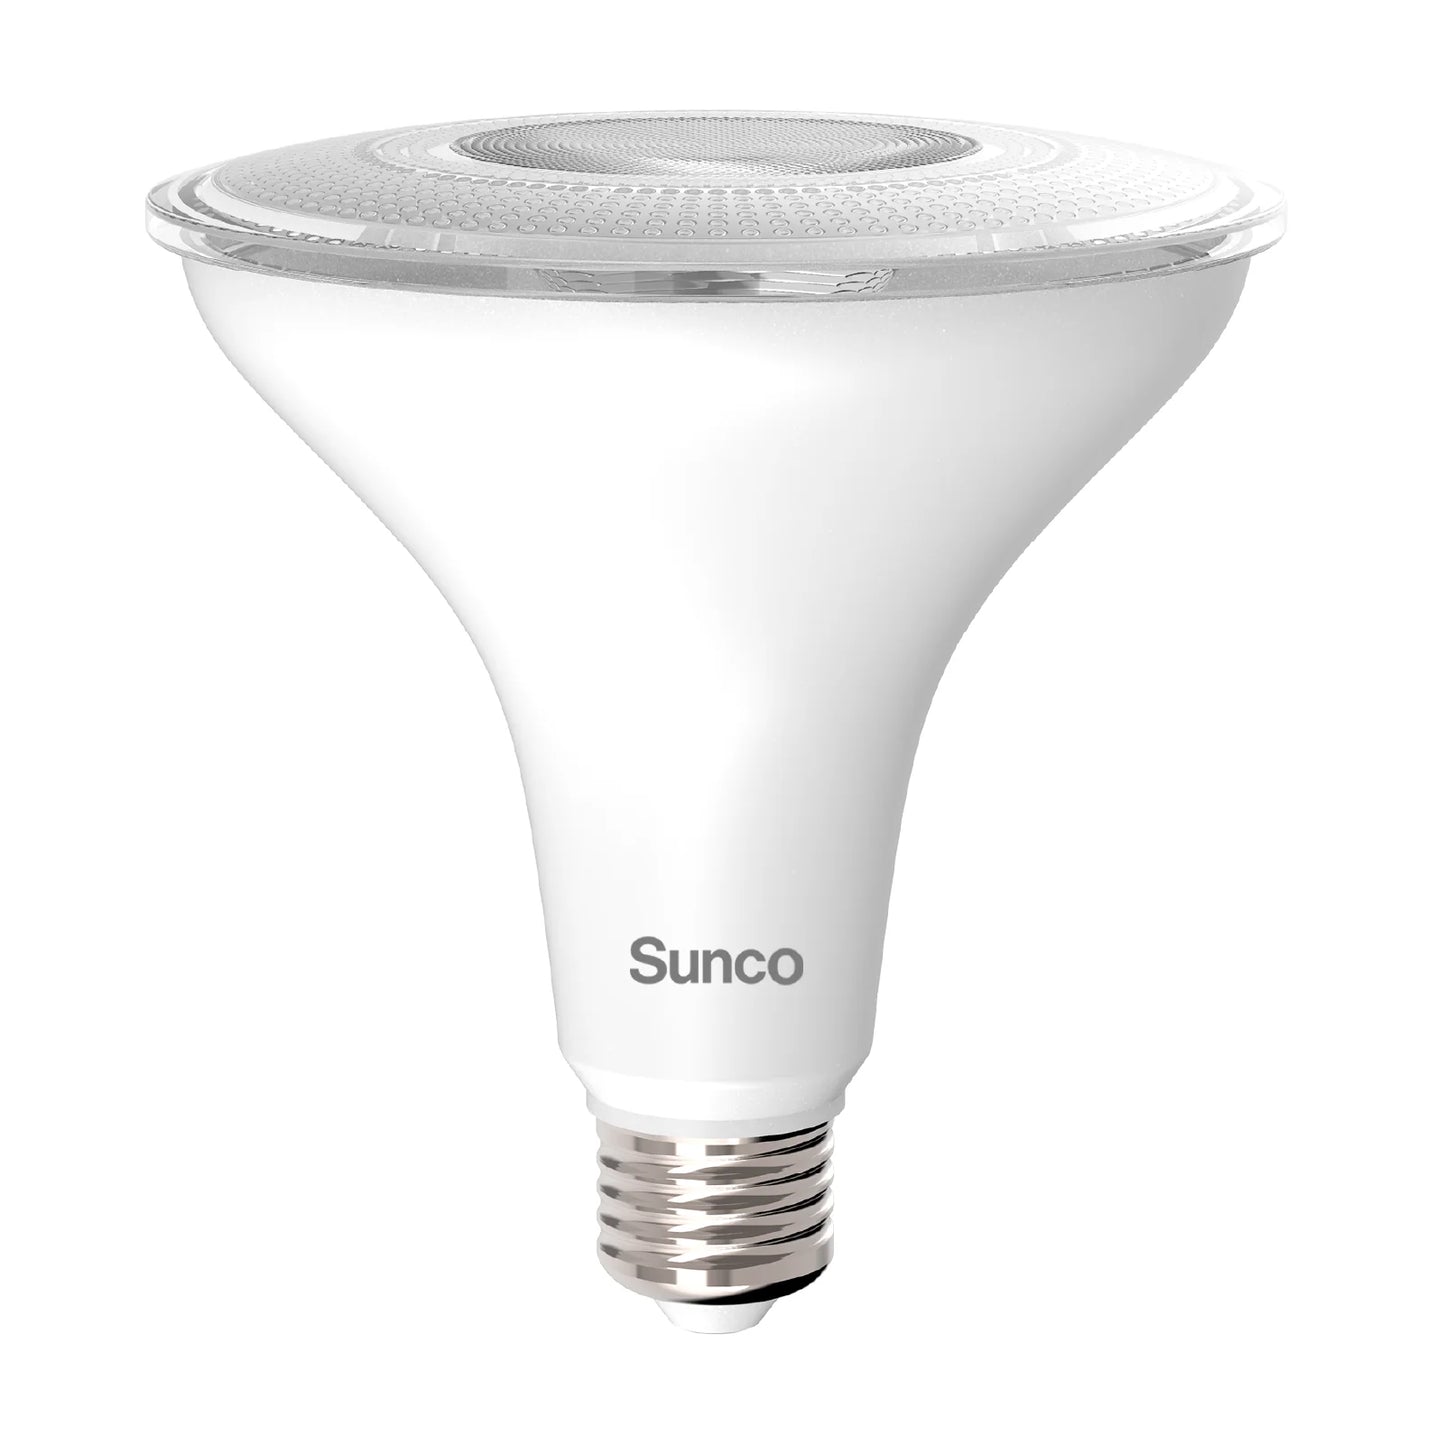 Sunco Lighting Dimmable PAR 38 Bulb 1050 Lumens